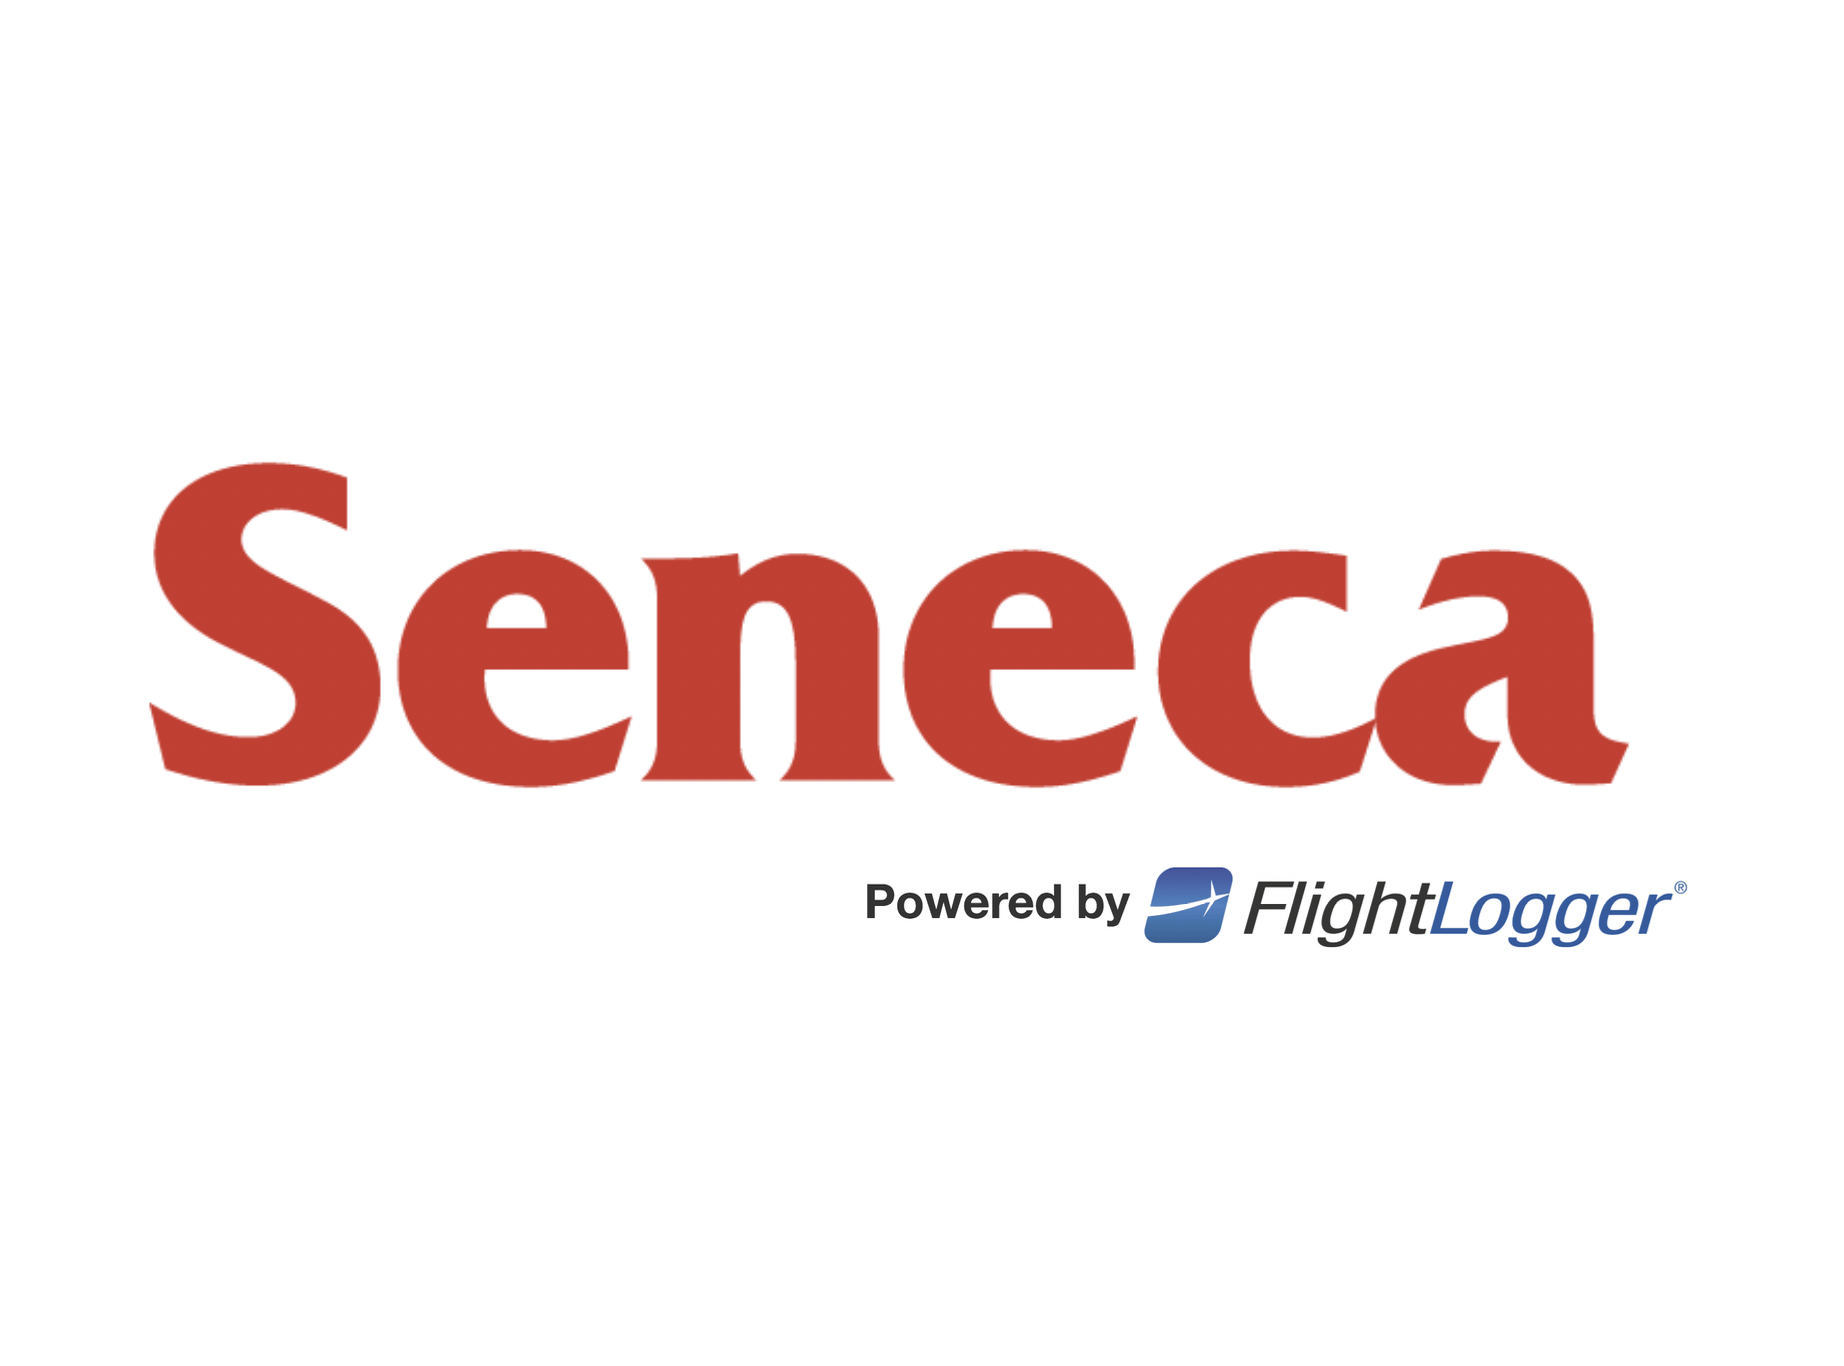 Seneca Logo - Seneca College goes digital with FlightLogger